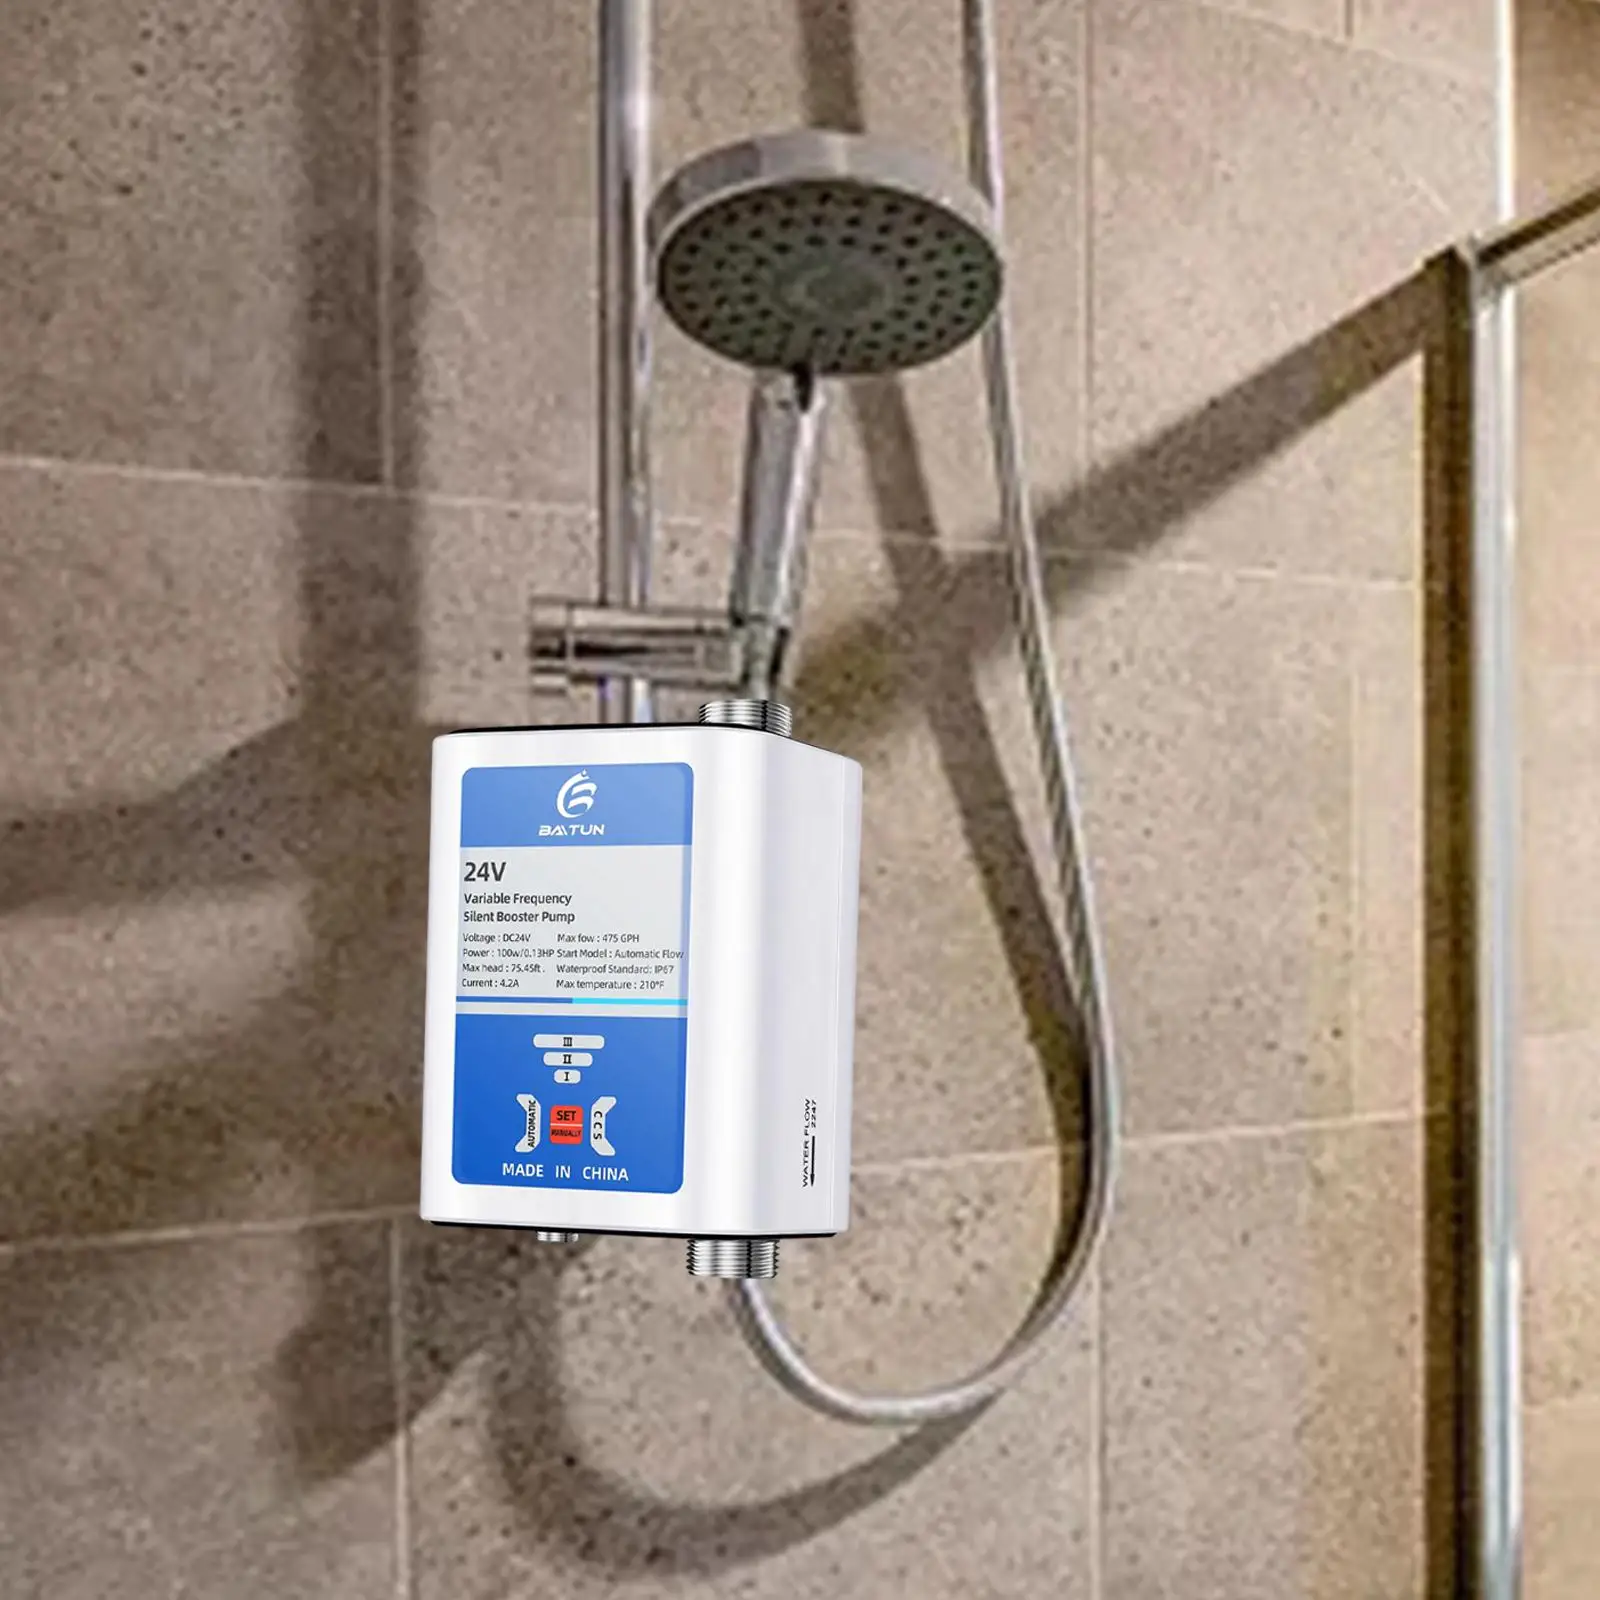 

Automatic Water Pressure Booster Pump Max Temperature 210 F Mute Portable 24V Boost Pressure Pump for Household Home Washroom